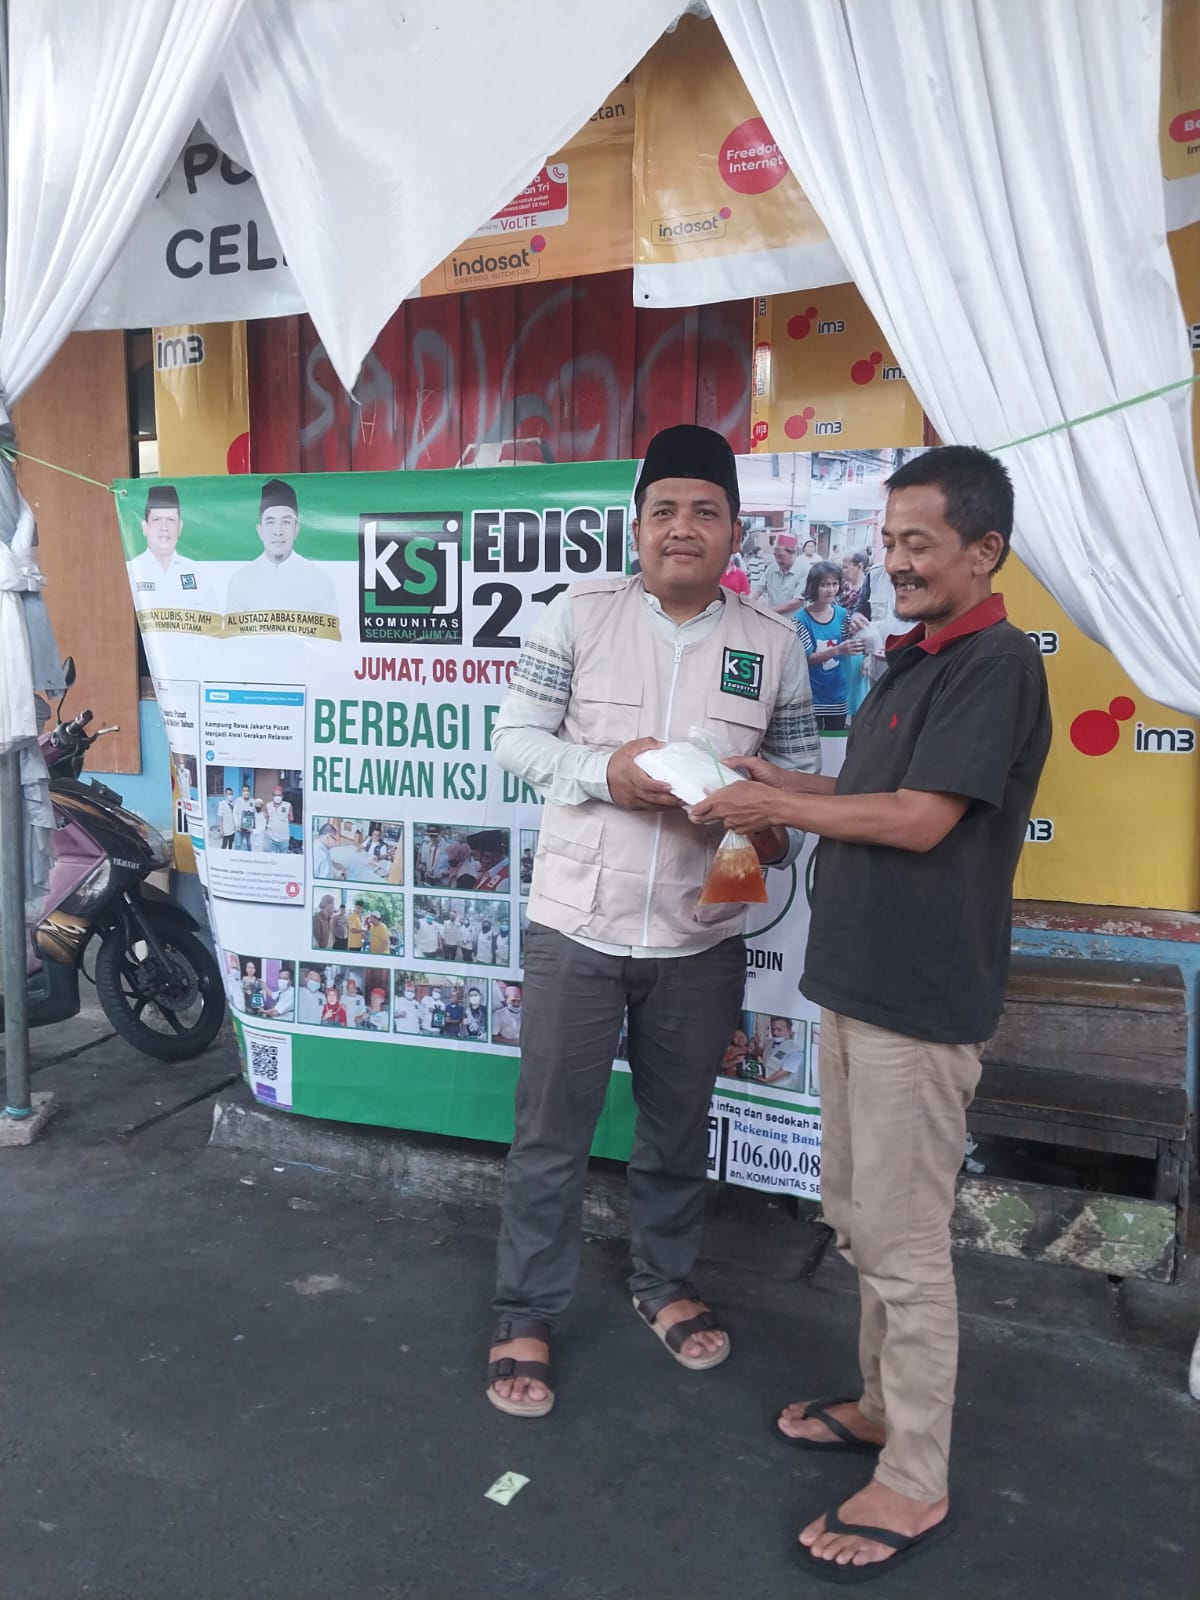 Edisi 217, Relawan KSJ Jakarta Pusat berbagi Seratusan Nasi Kotak